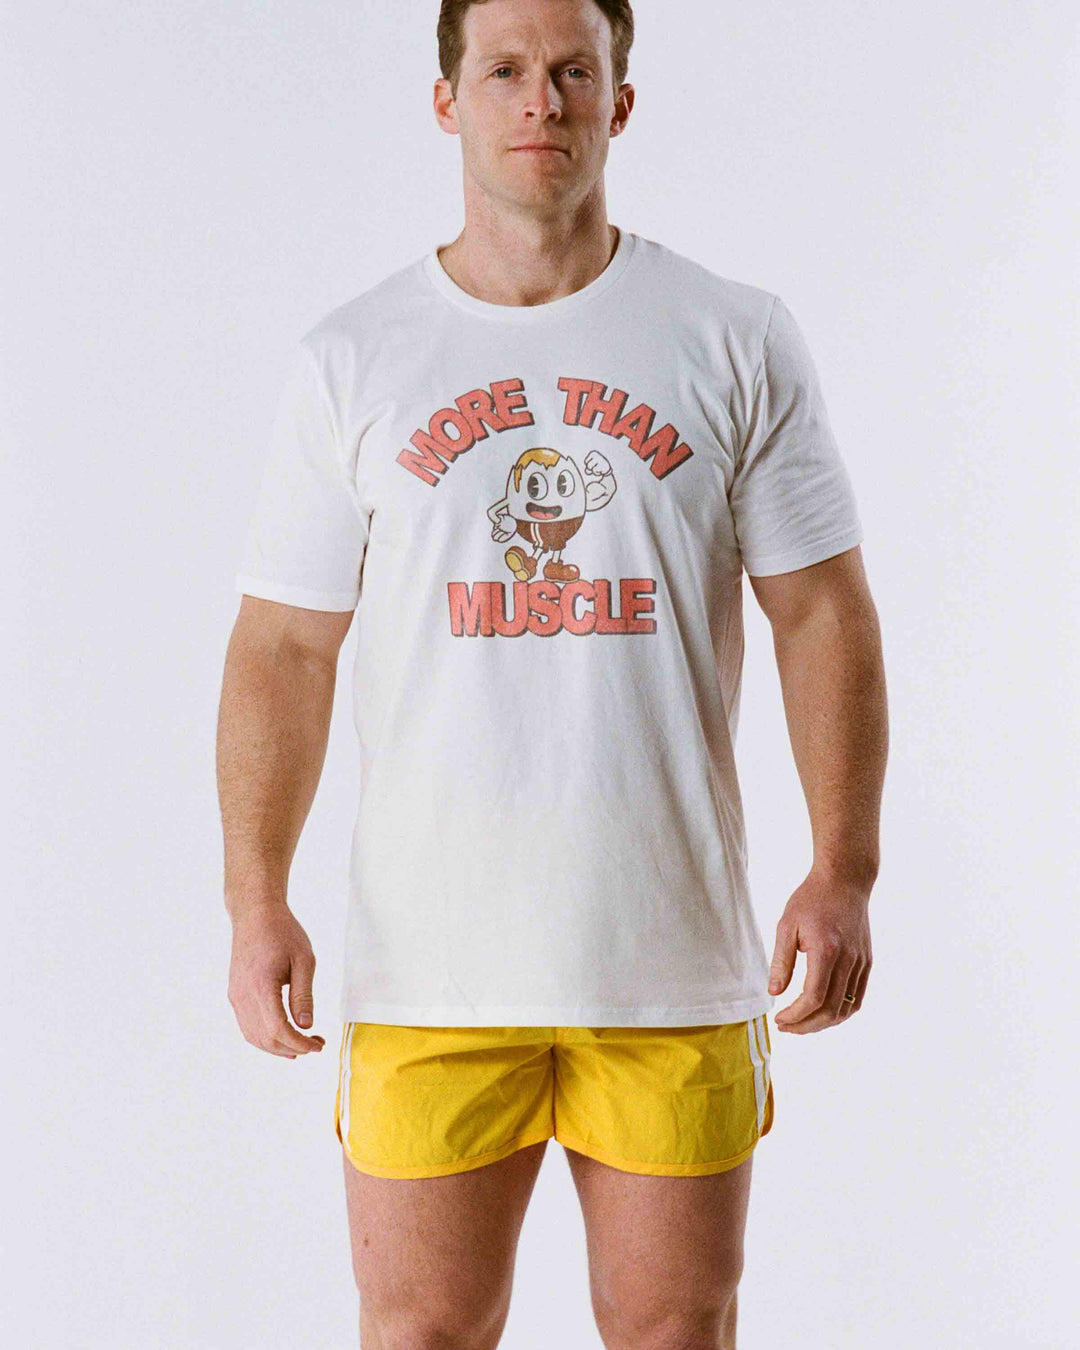 Vintage Gym T-Shirts & T-Shirt Designs